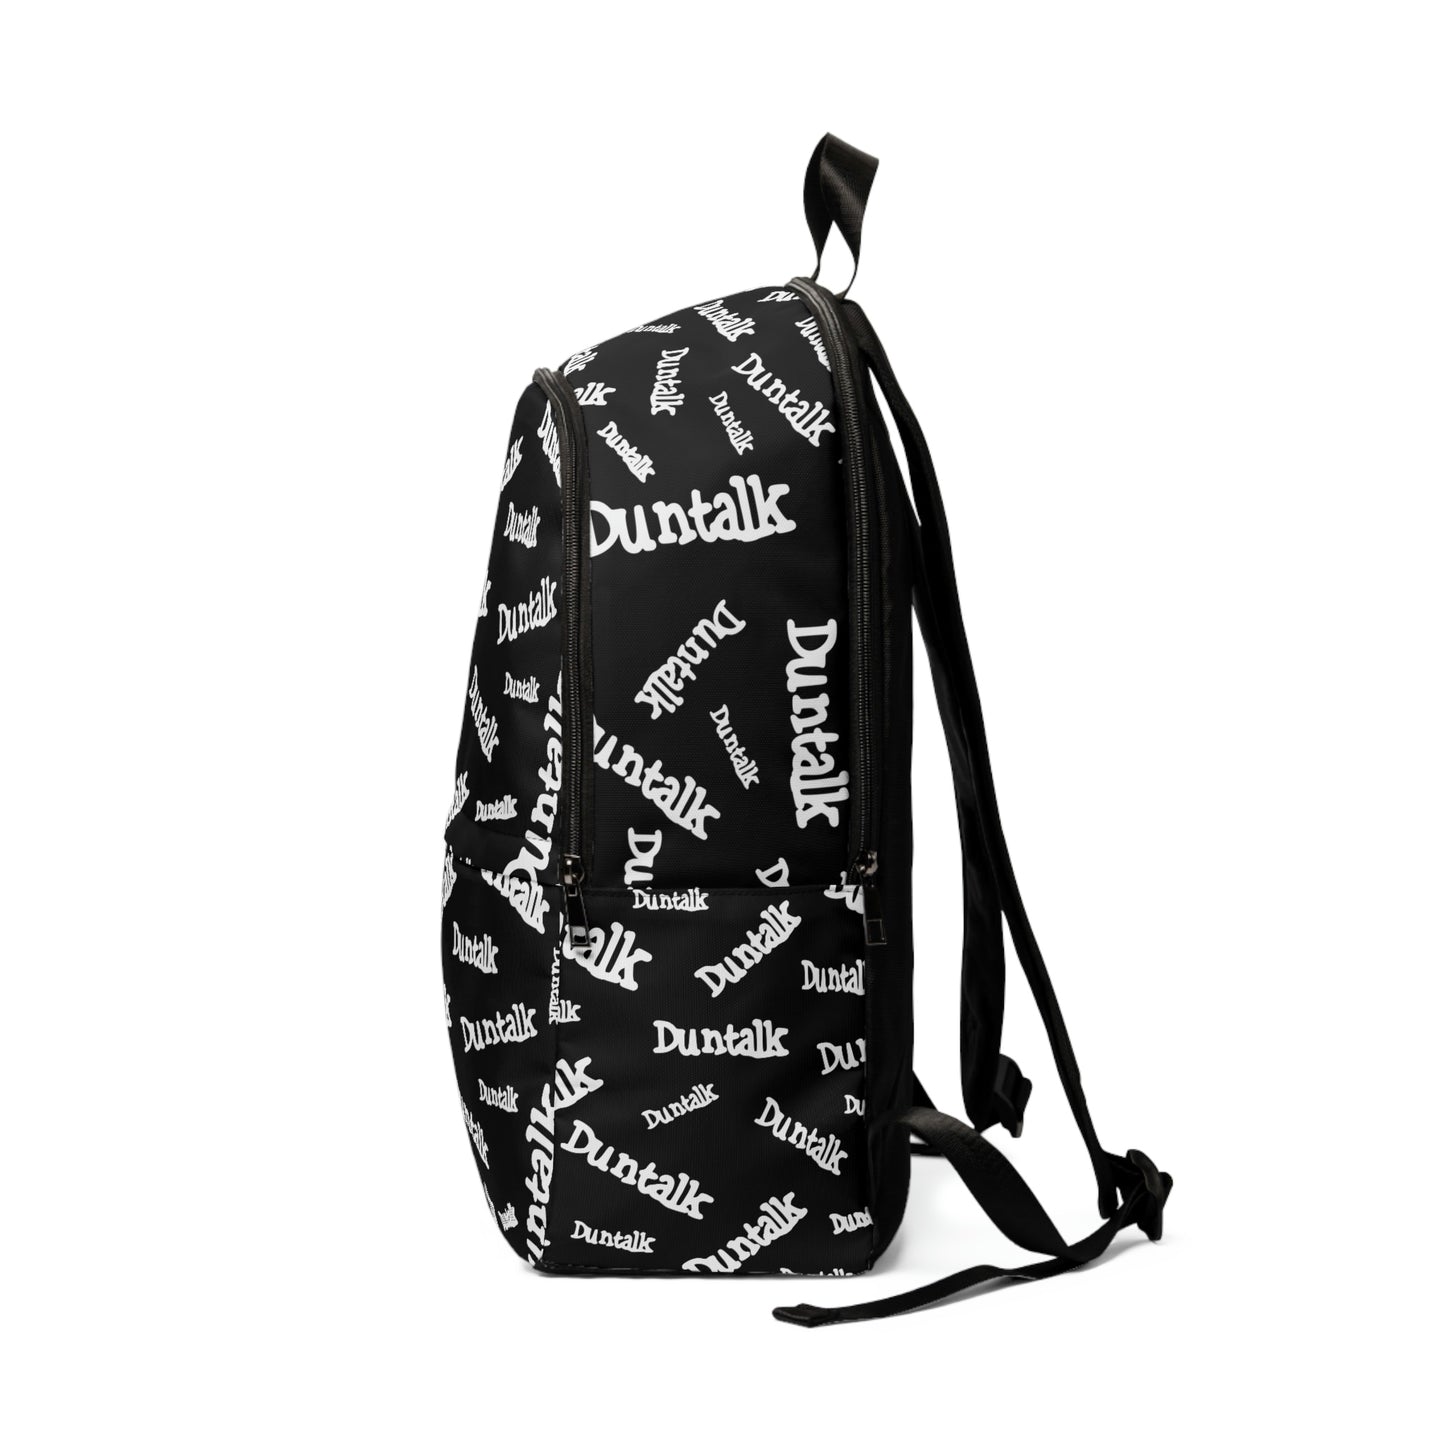 Duntalk "Signature" Black Backpack - Small